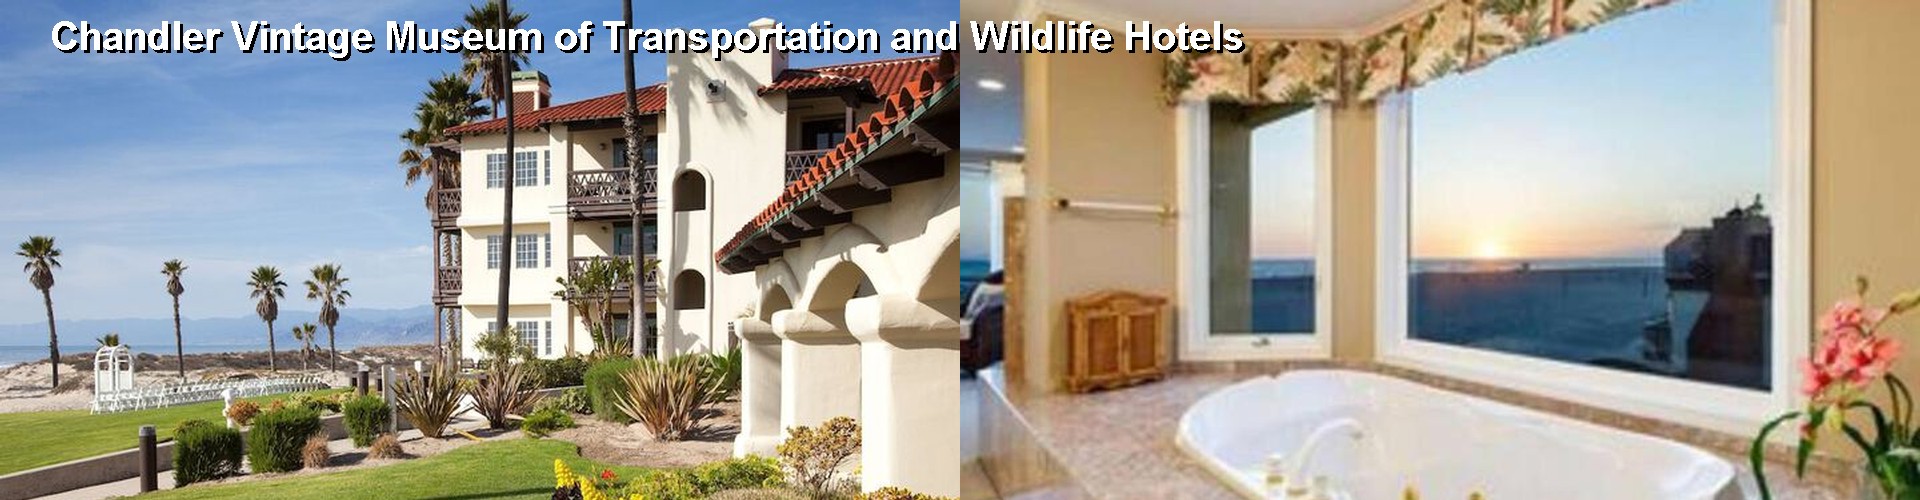 5 Best Hotels near Chandler Vintage Museum of Transportation and Wildlife